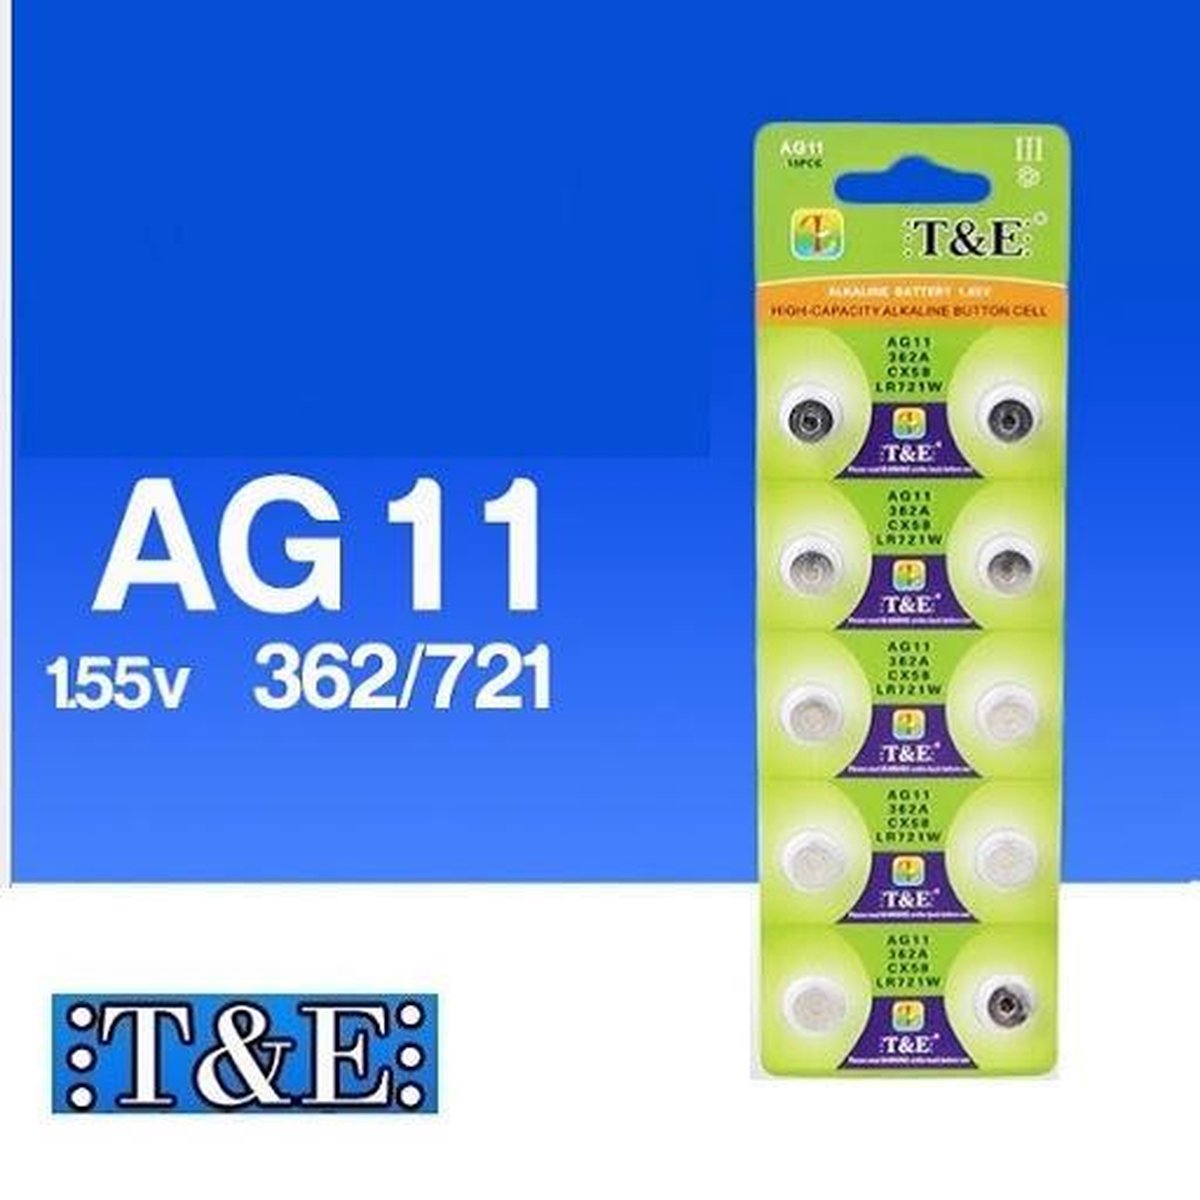 Batterijen AG11 Alkaline 10 stuks / knoopcel batterij / ook genoemd als G11/AG11/L721/SR720/SR58/362/532 /19/RW310 / 362A /CX58 / LR721W